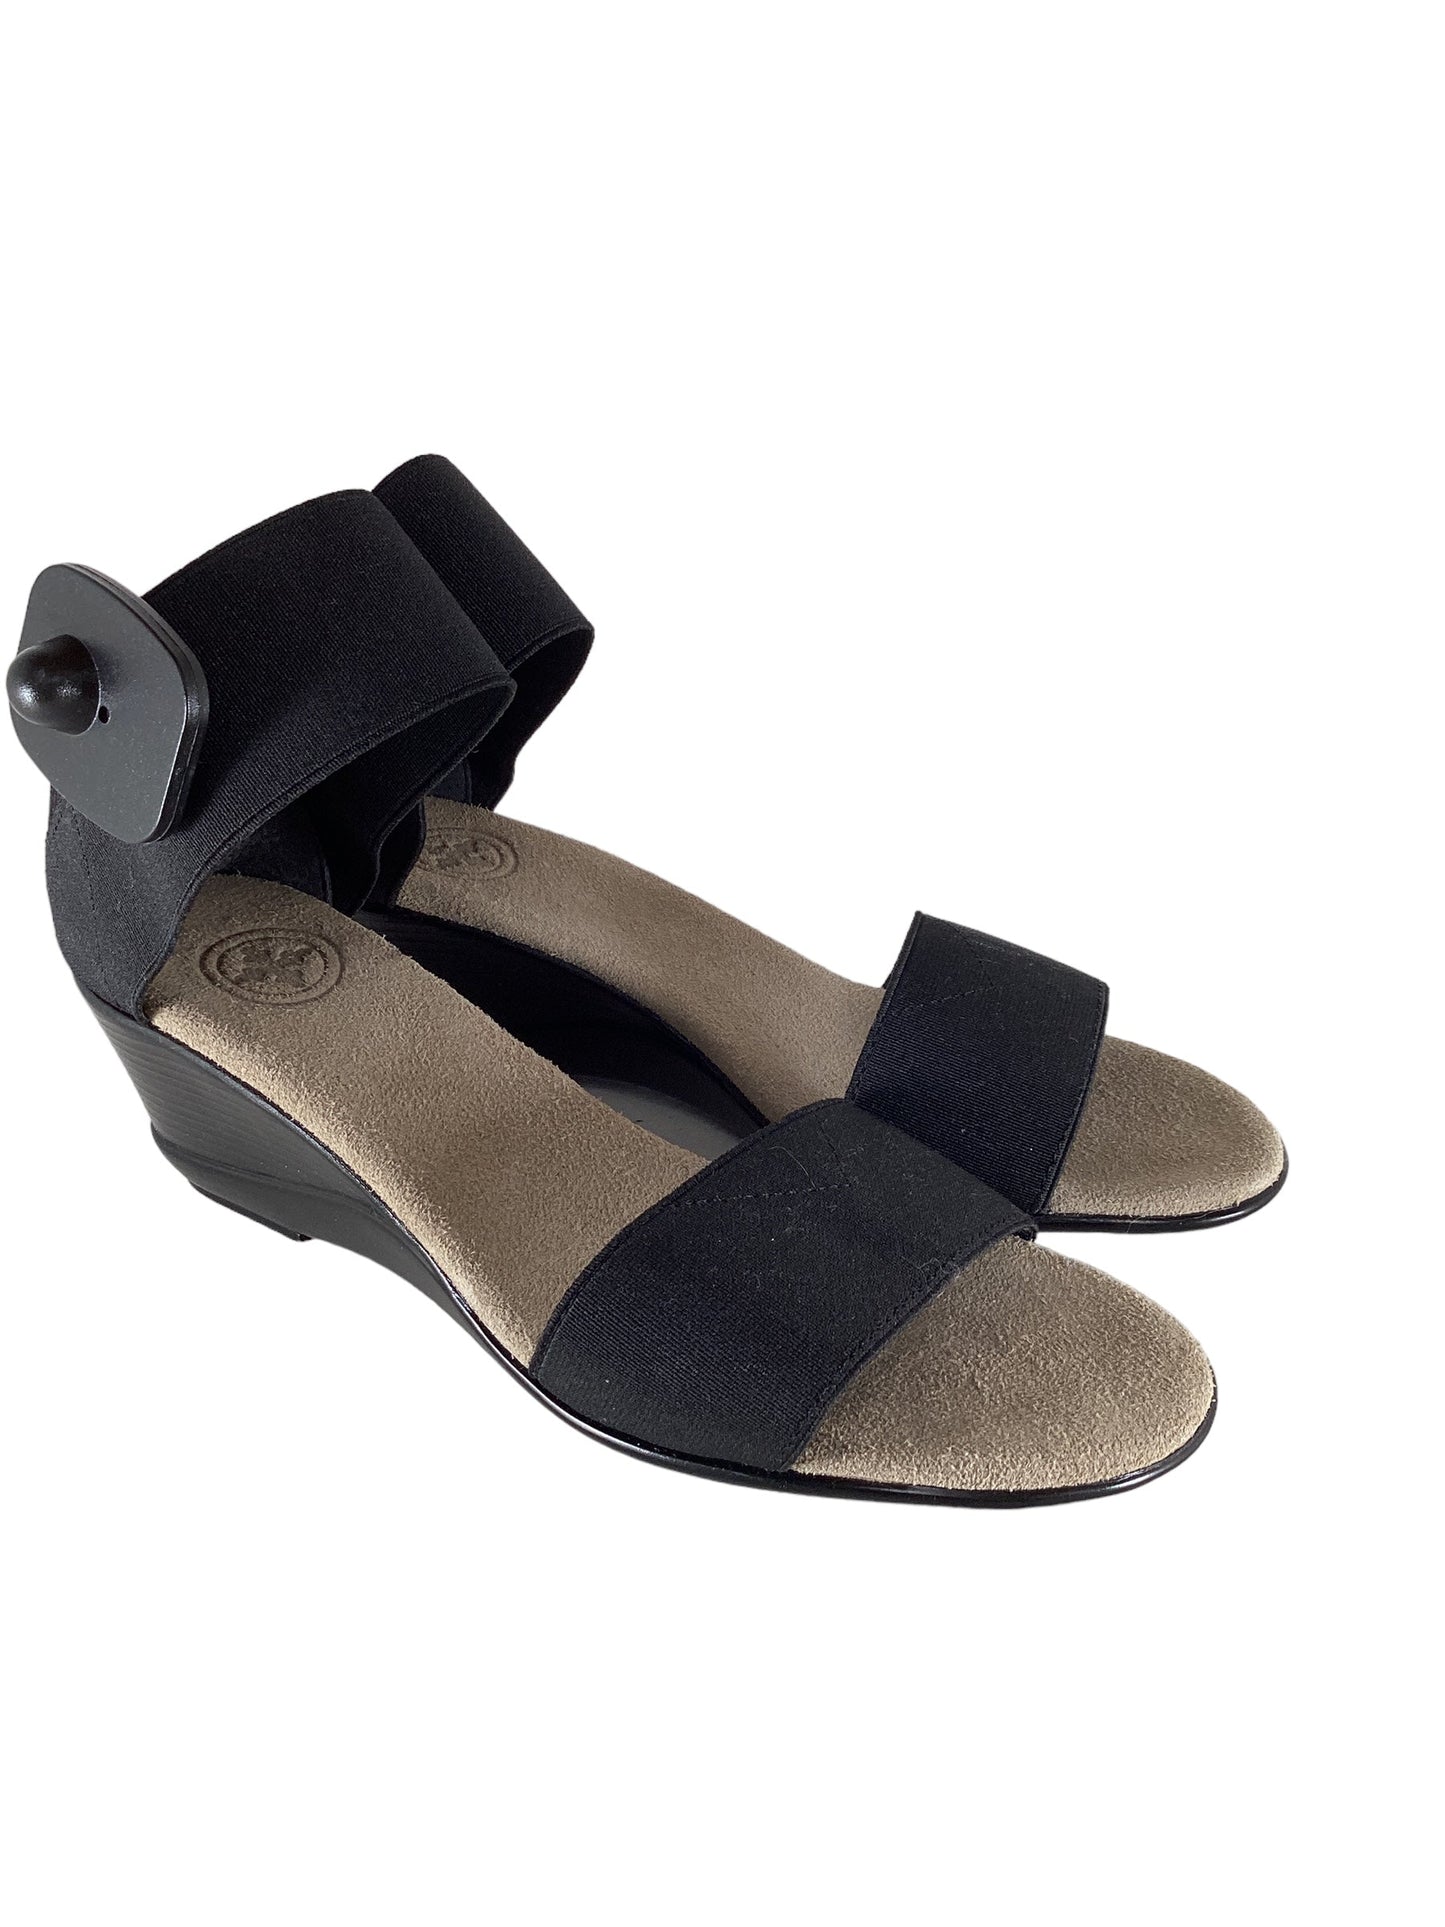 Black Sandals Heels Wedge Cme, Size 8